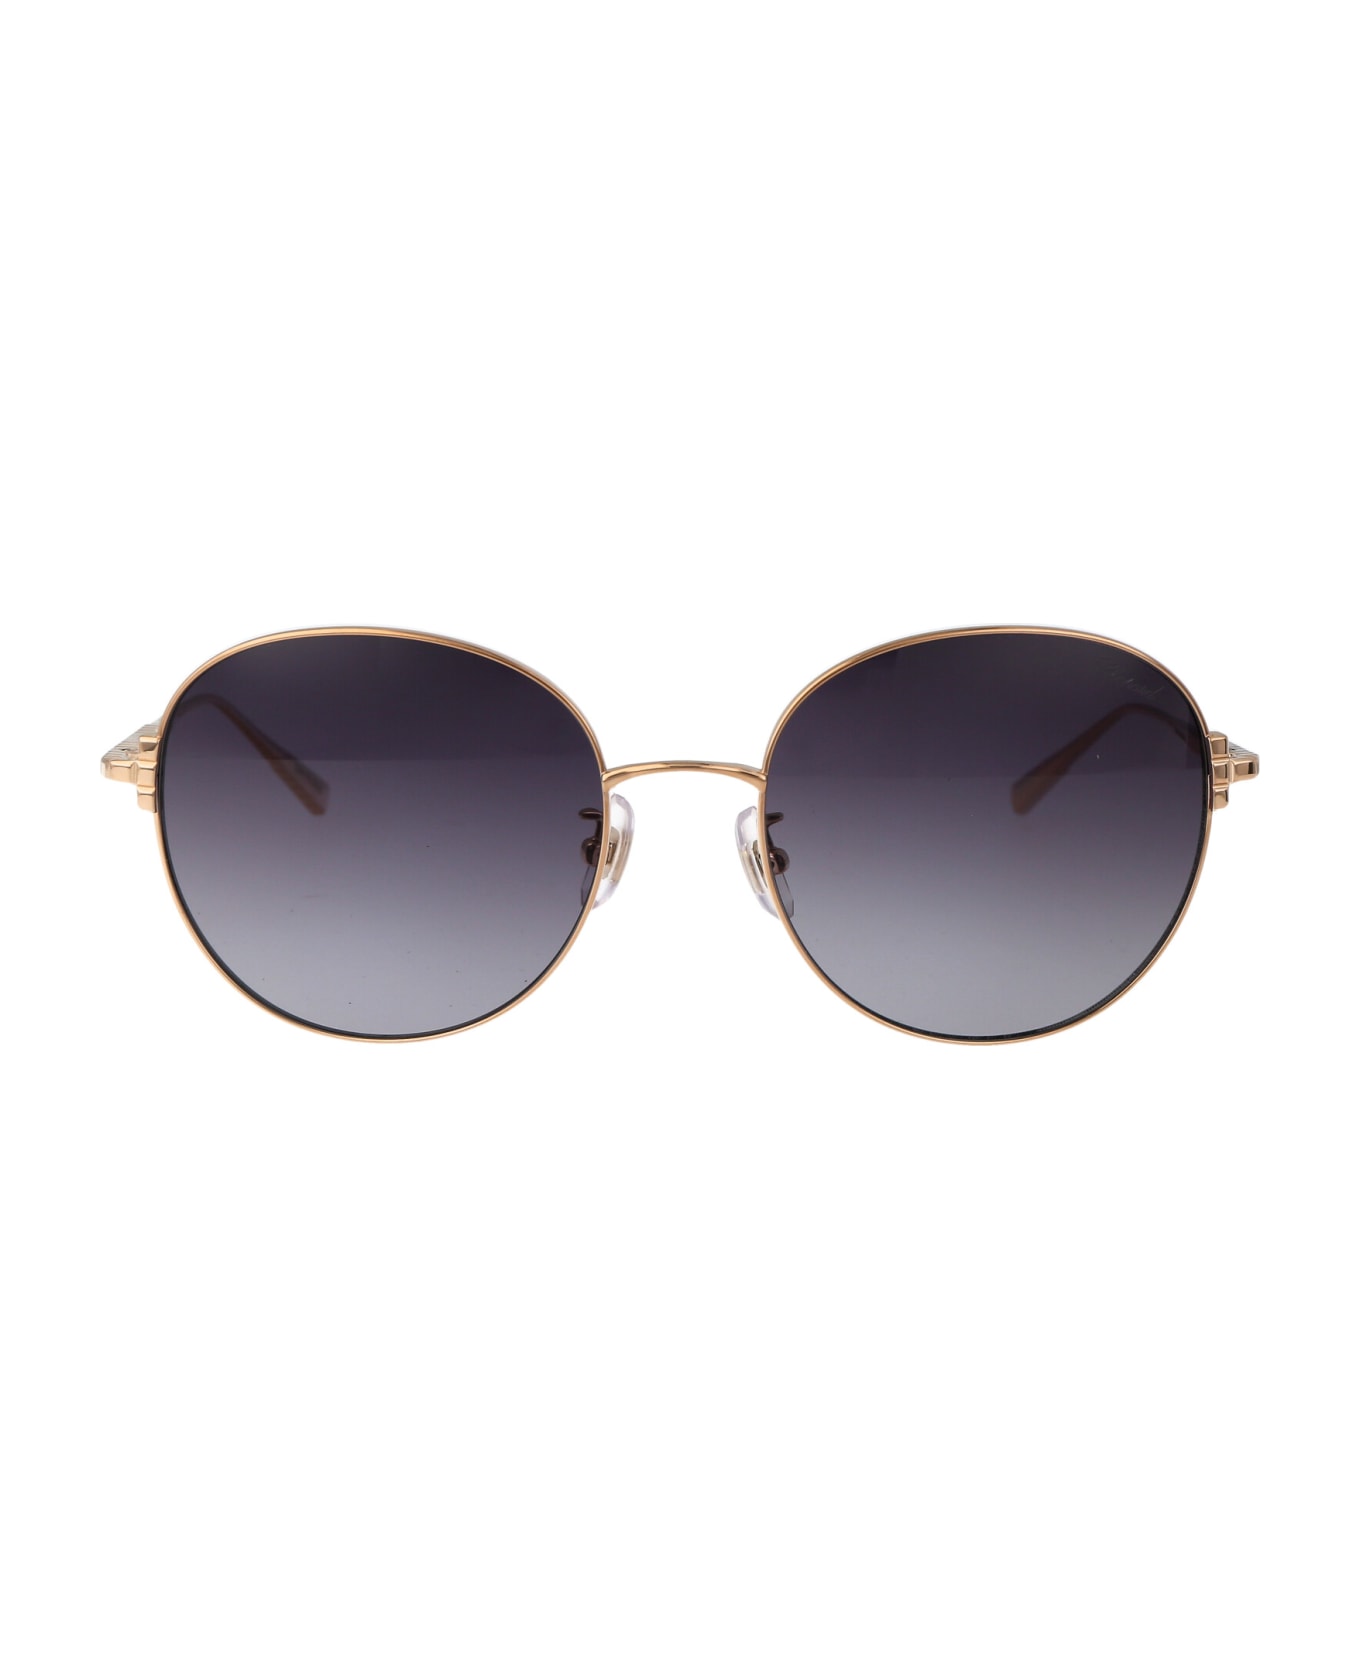 Chopard Schl03m Sunglasses - 0300 GOLD サングラス